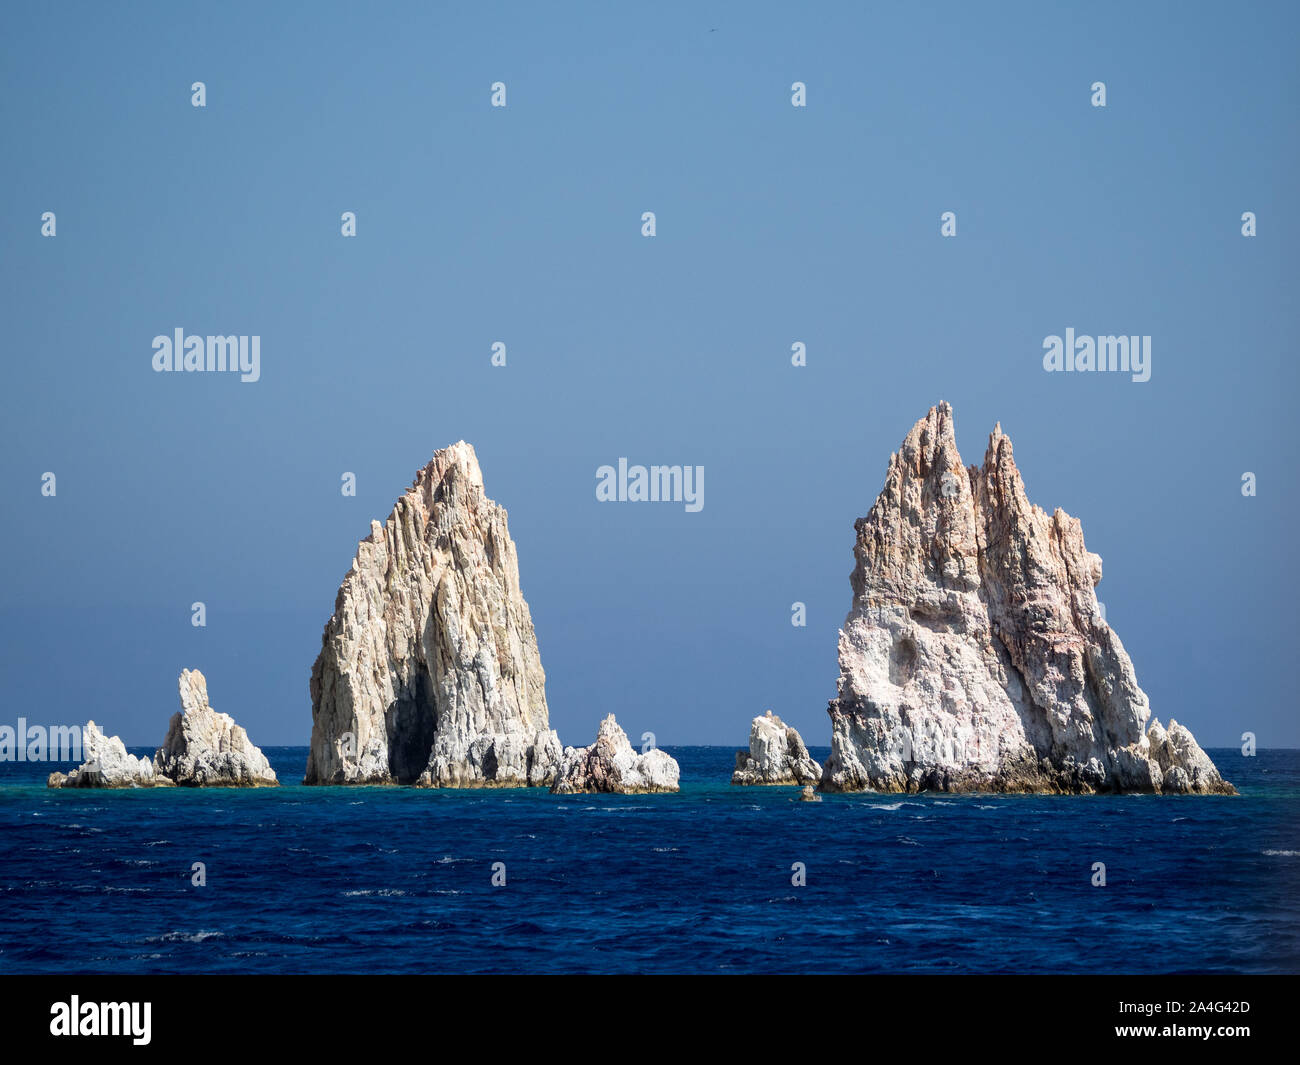 https://c8.alamy.com/comp/2A4G42D/a-view-of-poliegos-sharp-jaggered-teeth-needles-rocks-peloponnese-greece-in-calm-sea-water-under-clear-blue-sky-2A4G42D.jpg